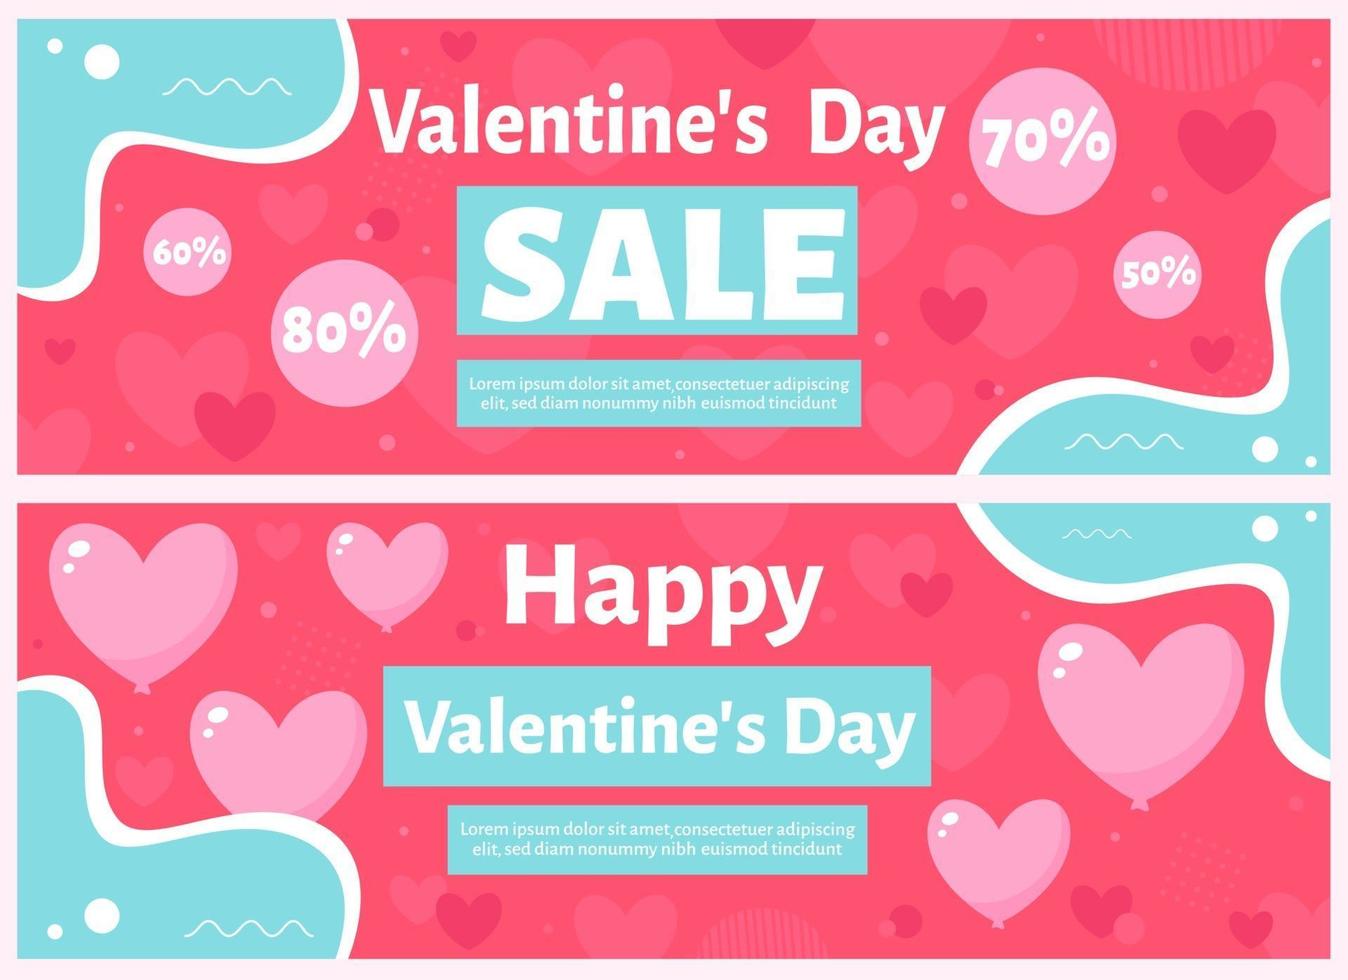 Valentine's Day sale. Vector illustration